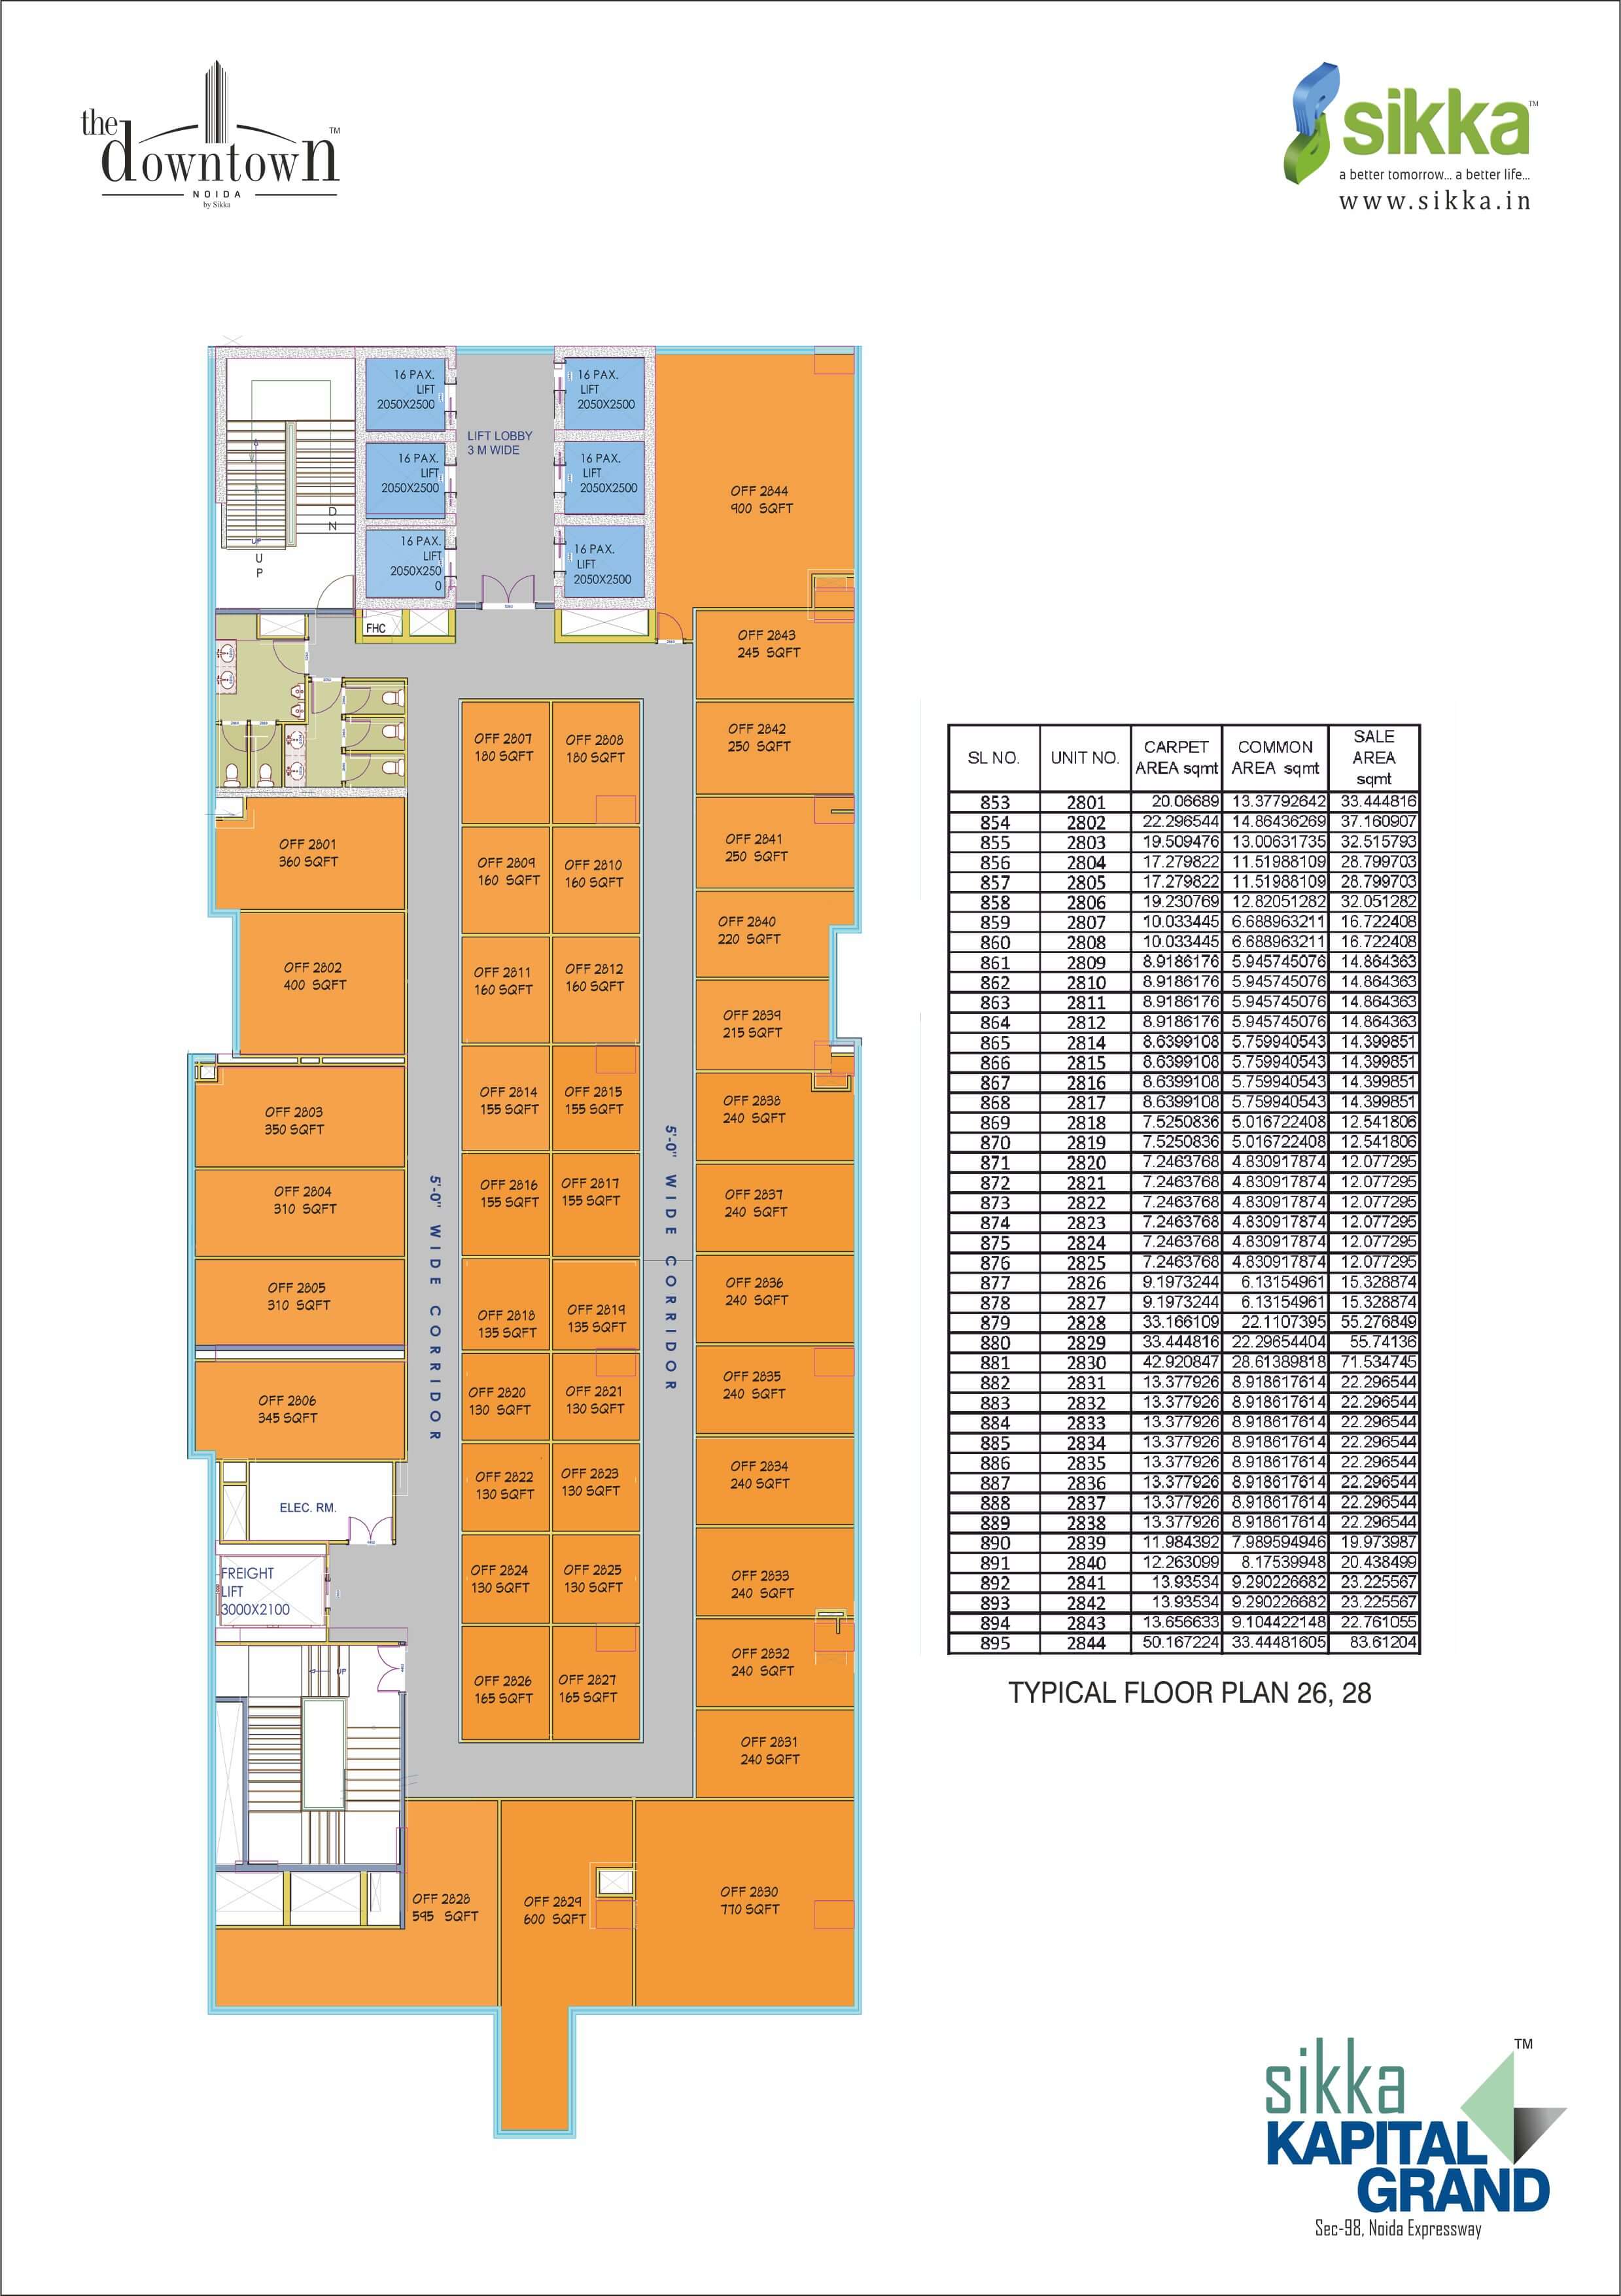 Kapital Grand Typical Floor Plan - 27, 28